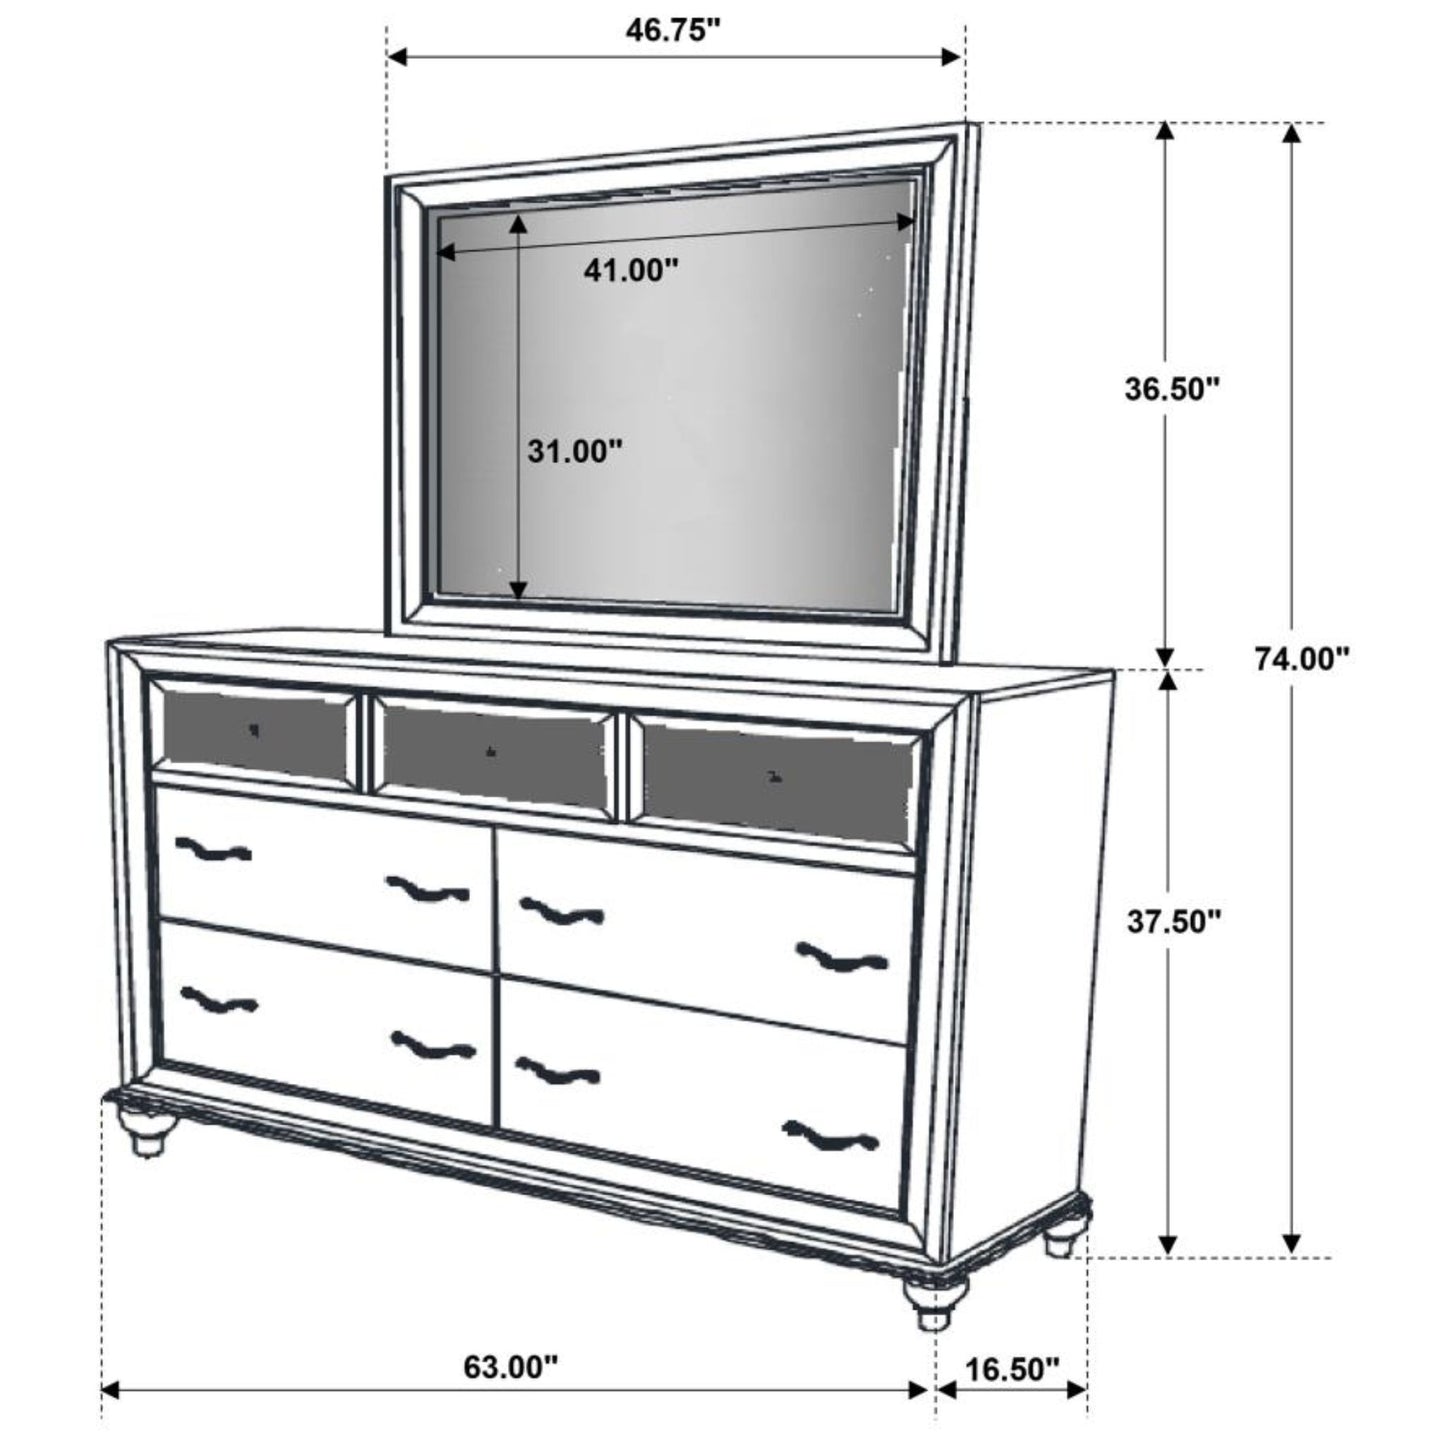 BARZINI 7-drawer Dresser with Mirror Black